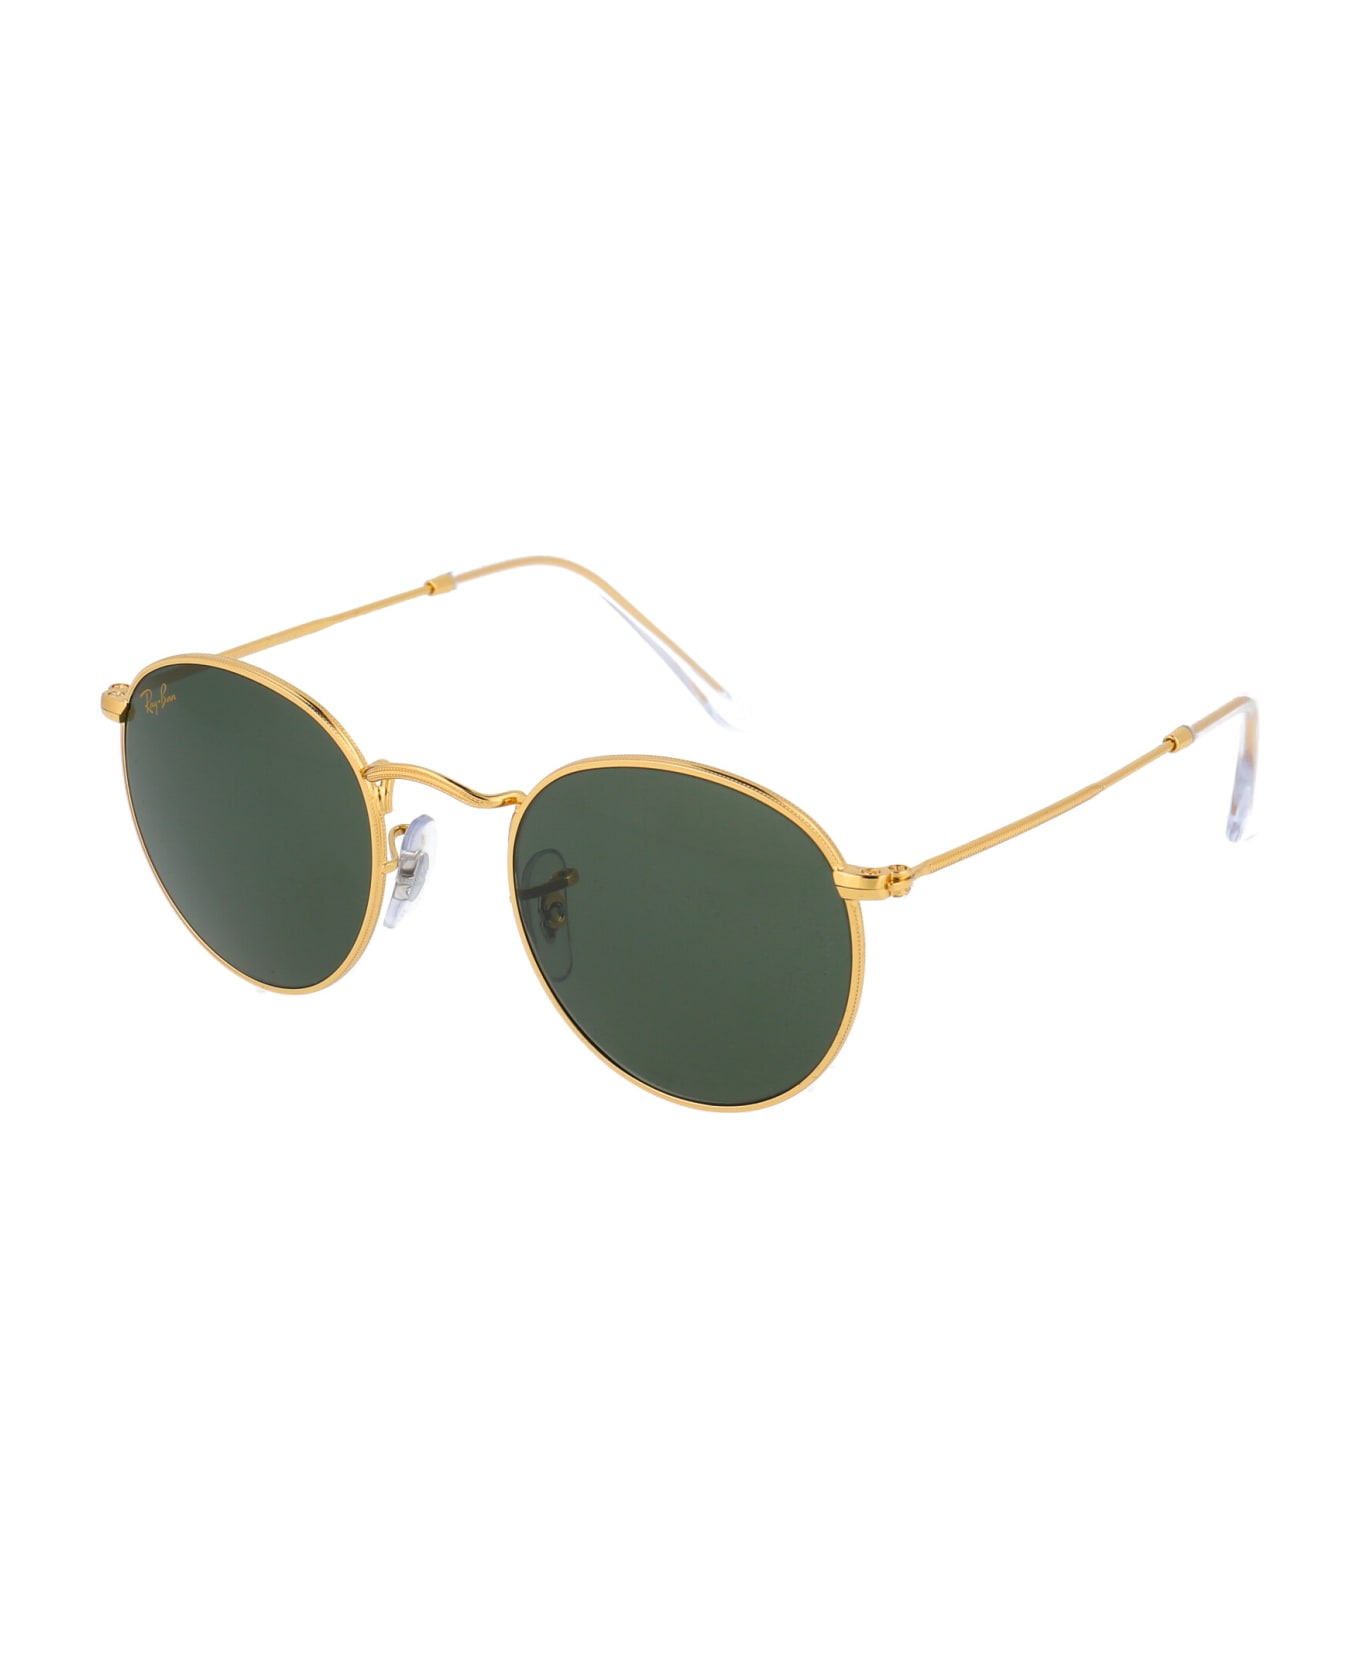 Ray-Ban Round Metal Sunglasses - 919631 GOLD サングラス